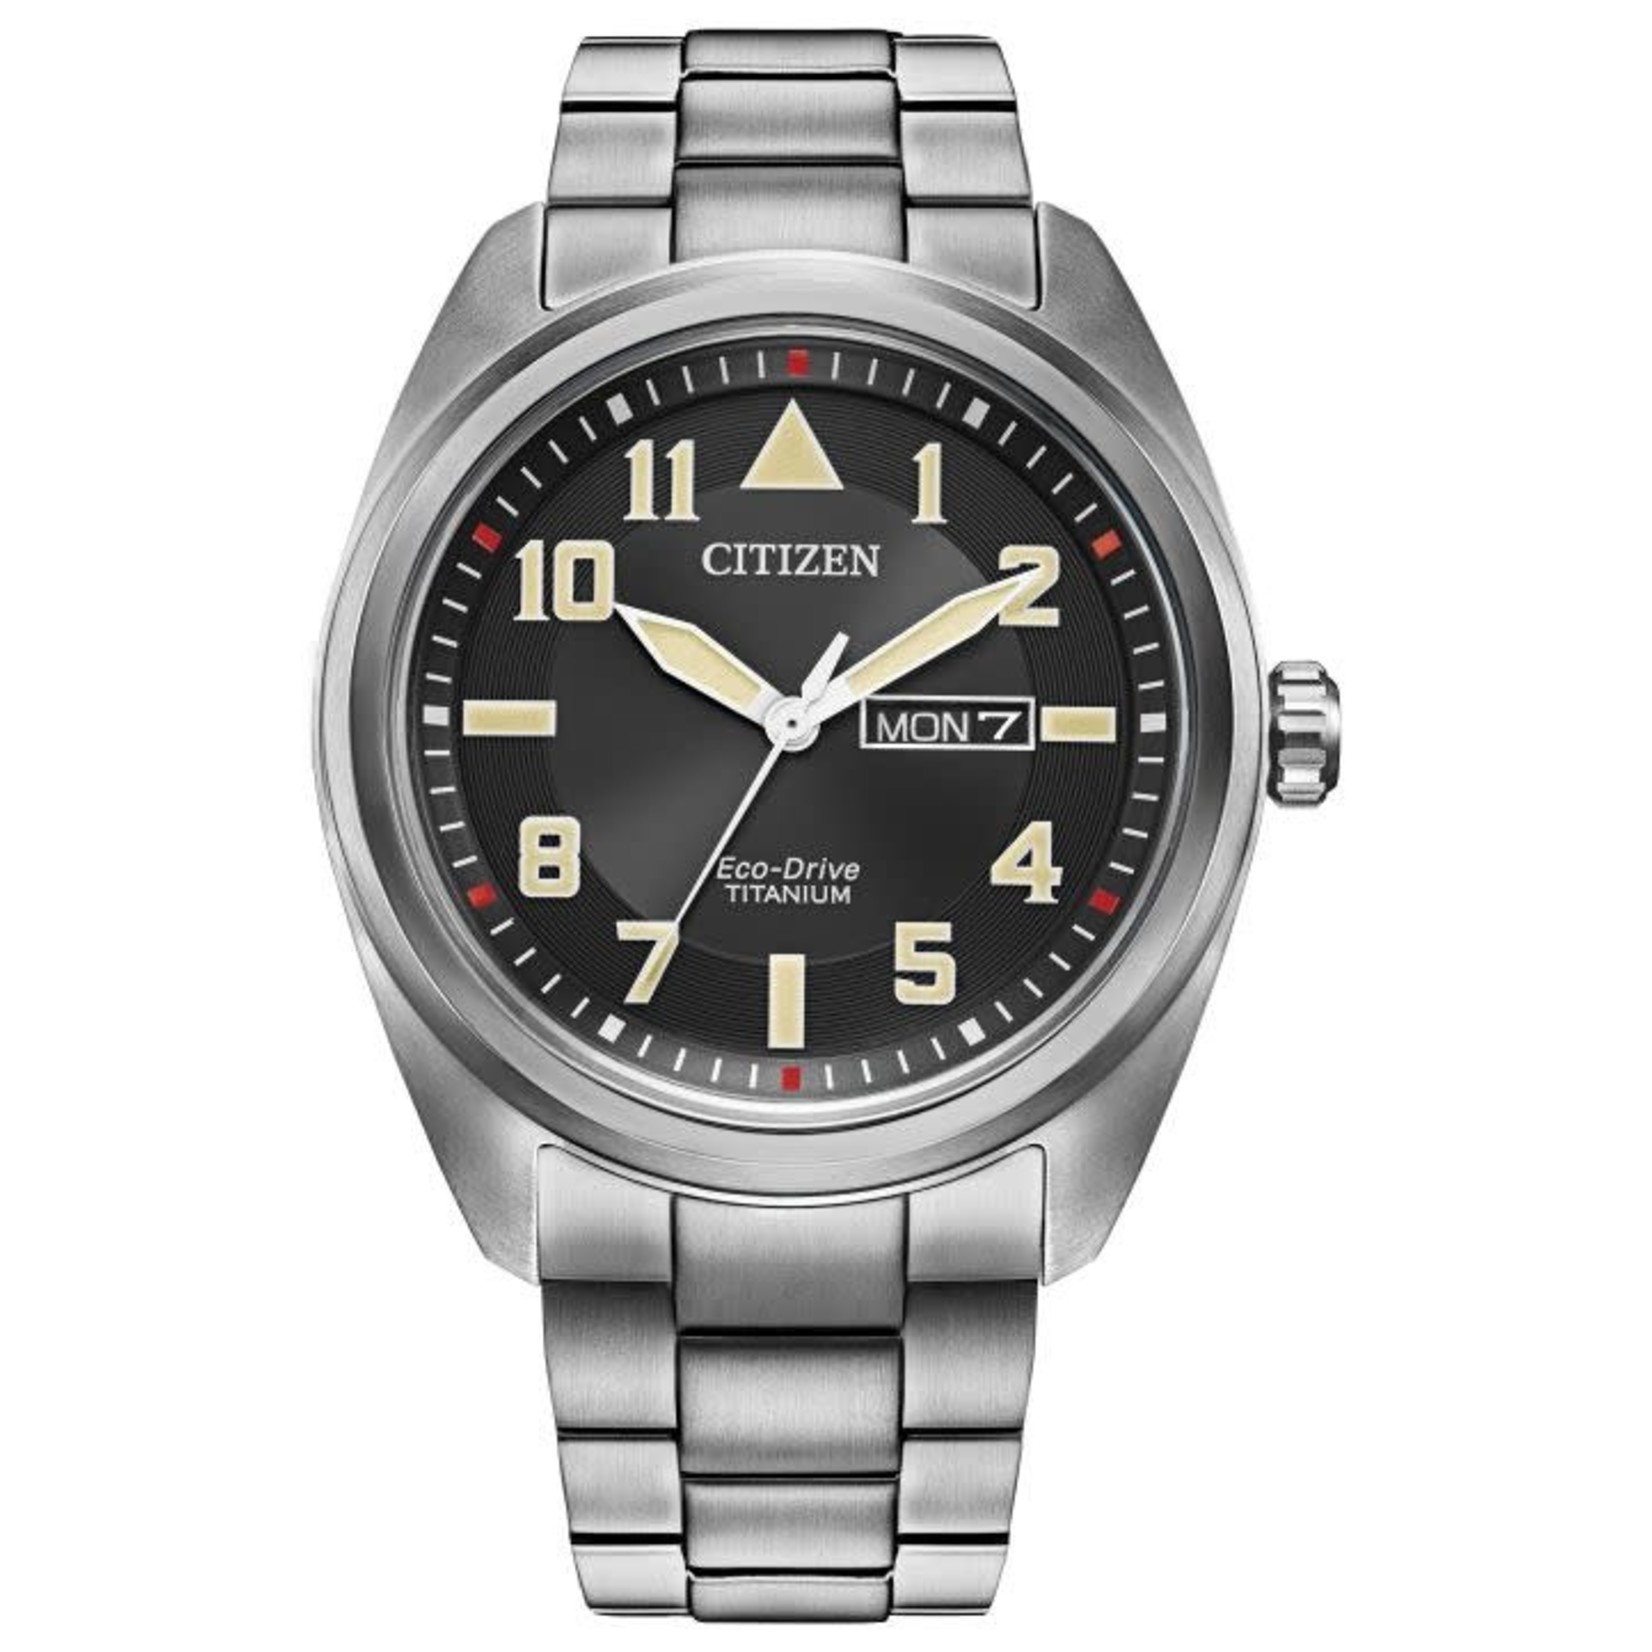 CITIZEN WATCH COMPANY Citizen Eco-Drive Garrison Titanium Watch w/Day/Date